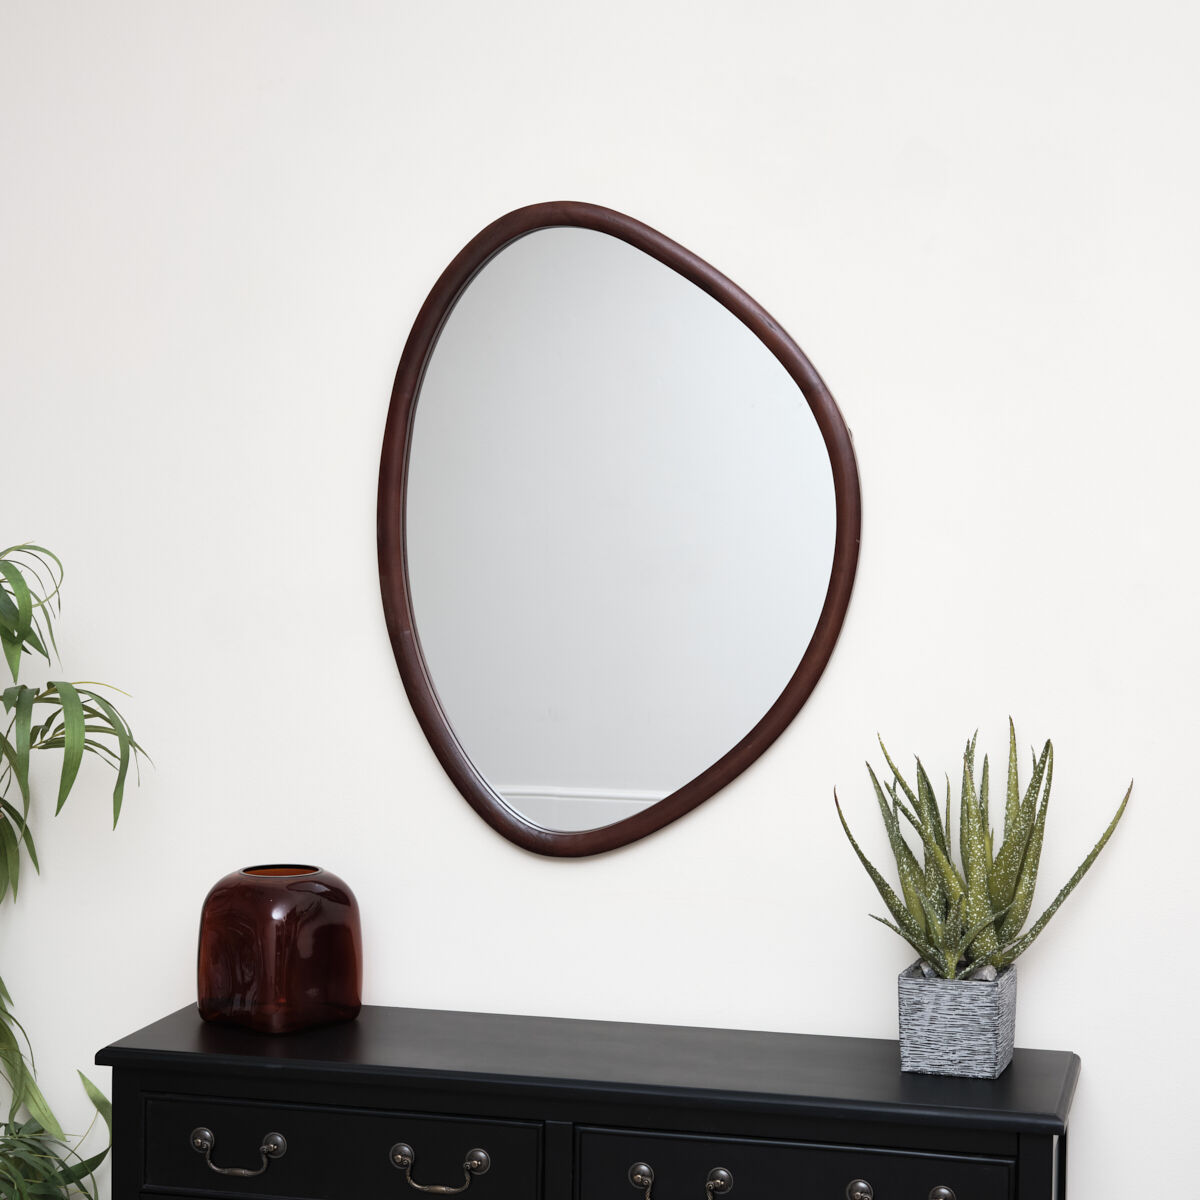 Asymmetrical Wooden Pebble Wall Mirror 60cm x 60cm Material: wood, metal, glass